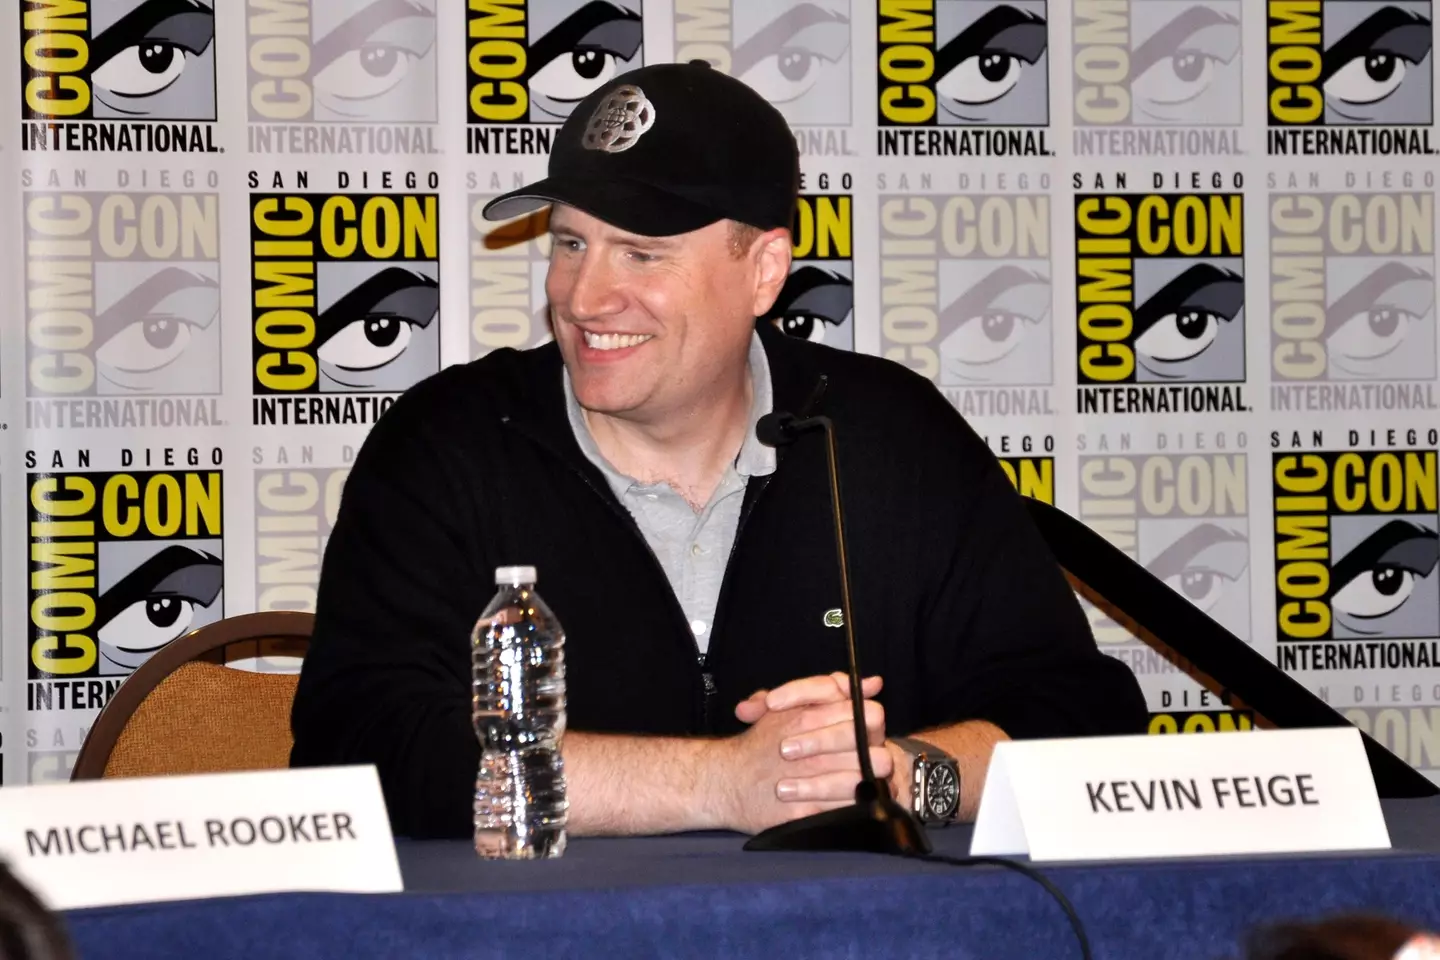 Kevin Feige became president of Marvel Studios in 2007.